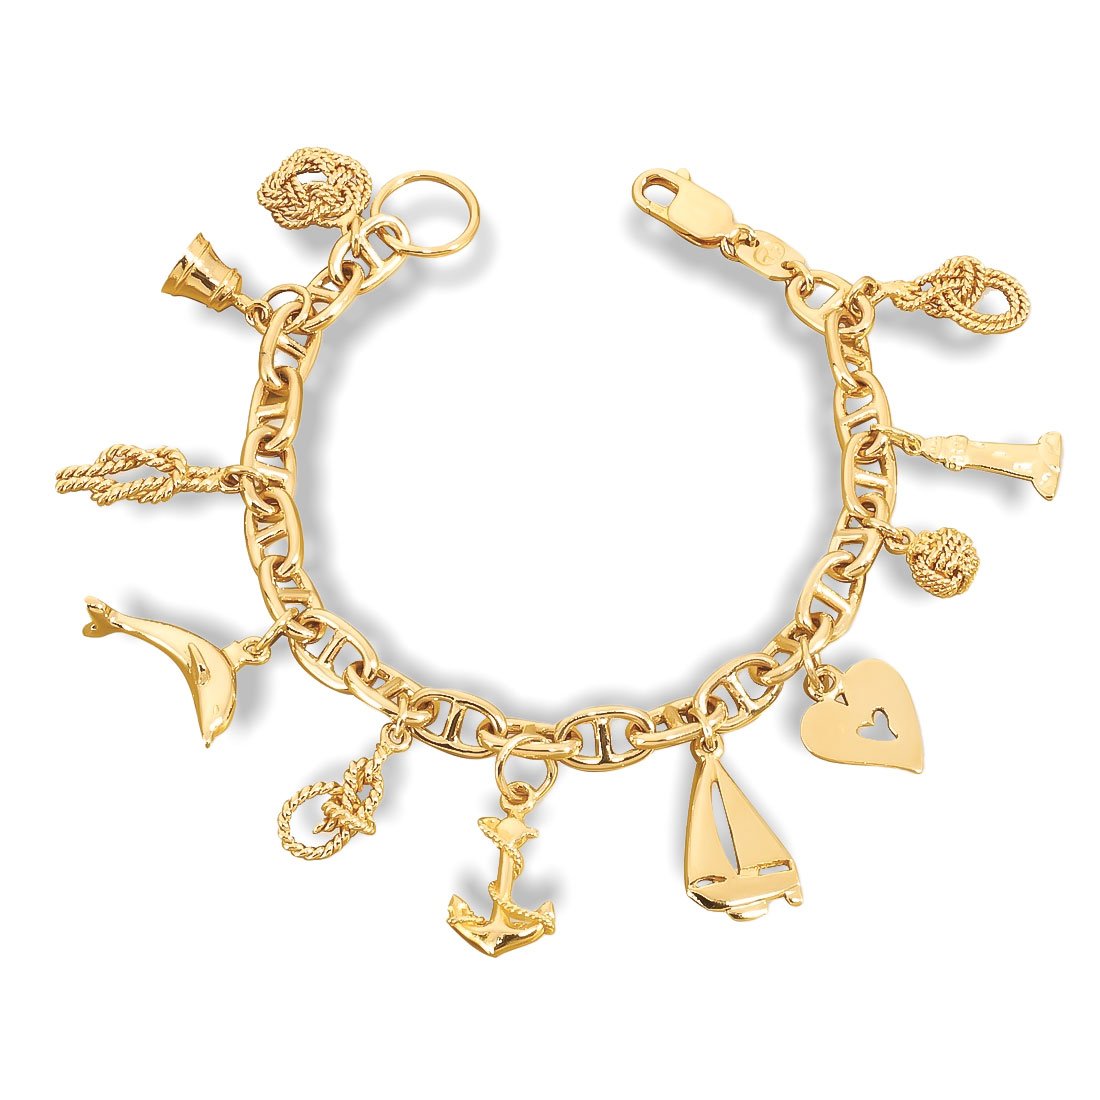 Anchor Chain Bracelet - Heavy Nautical Gold Bracelets - Aumaris Anchor Chains - Sailing Bracelet 